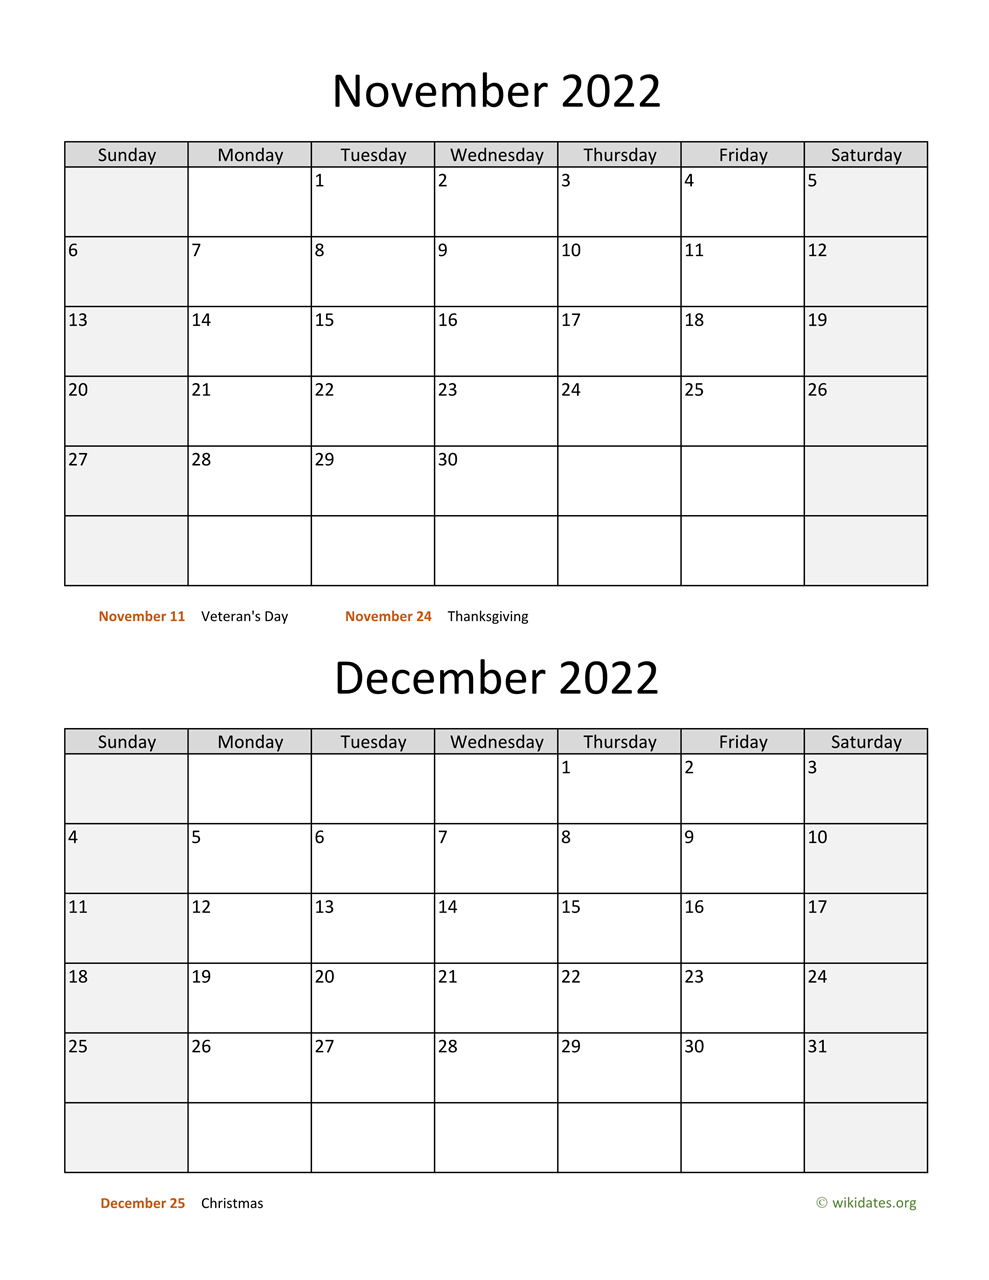 September December 2022 Calendar November And December 2022 Calendar | Wikidates.org